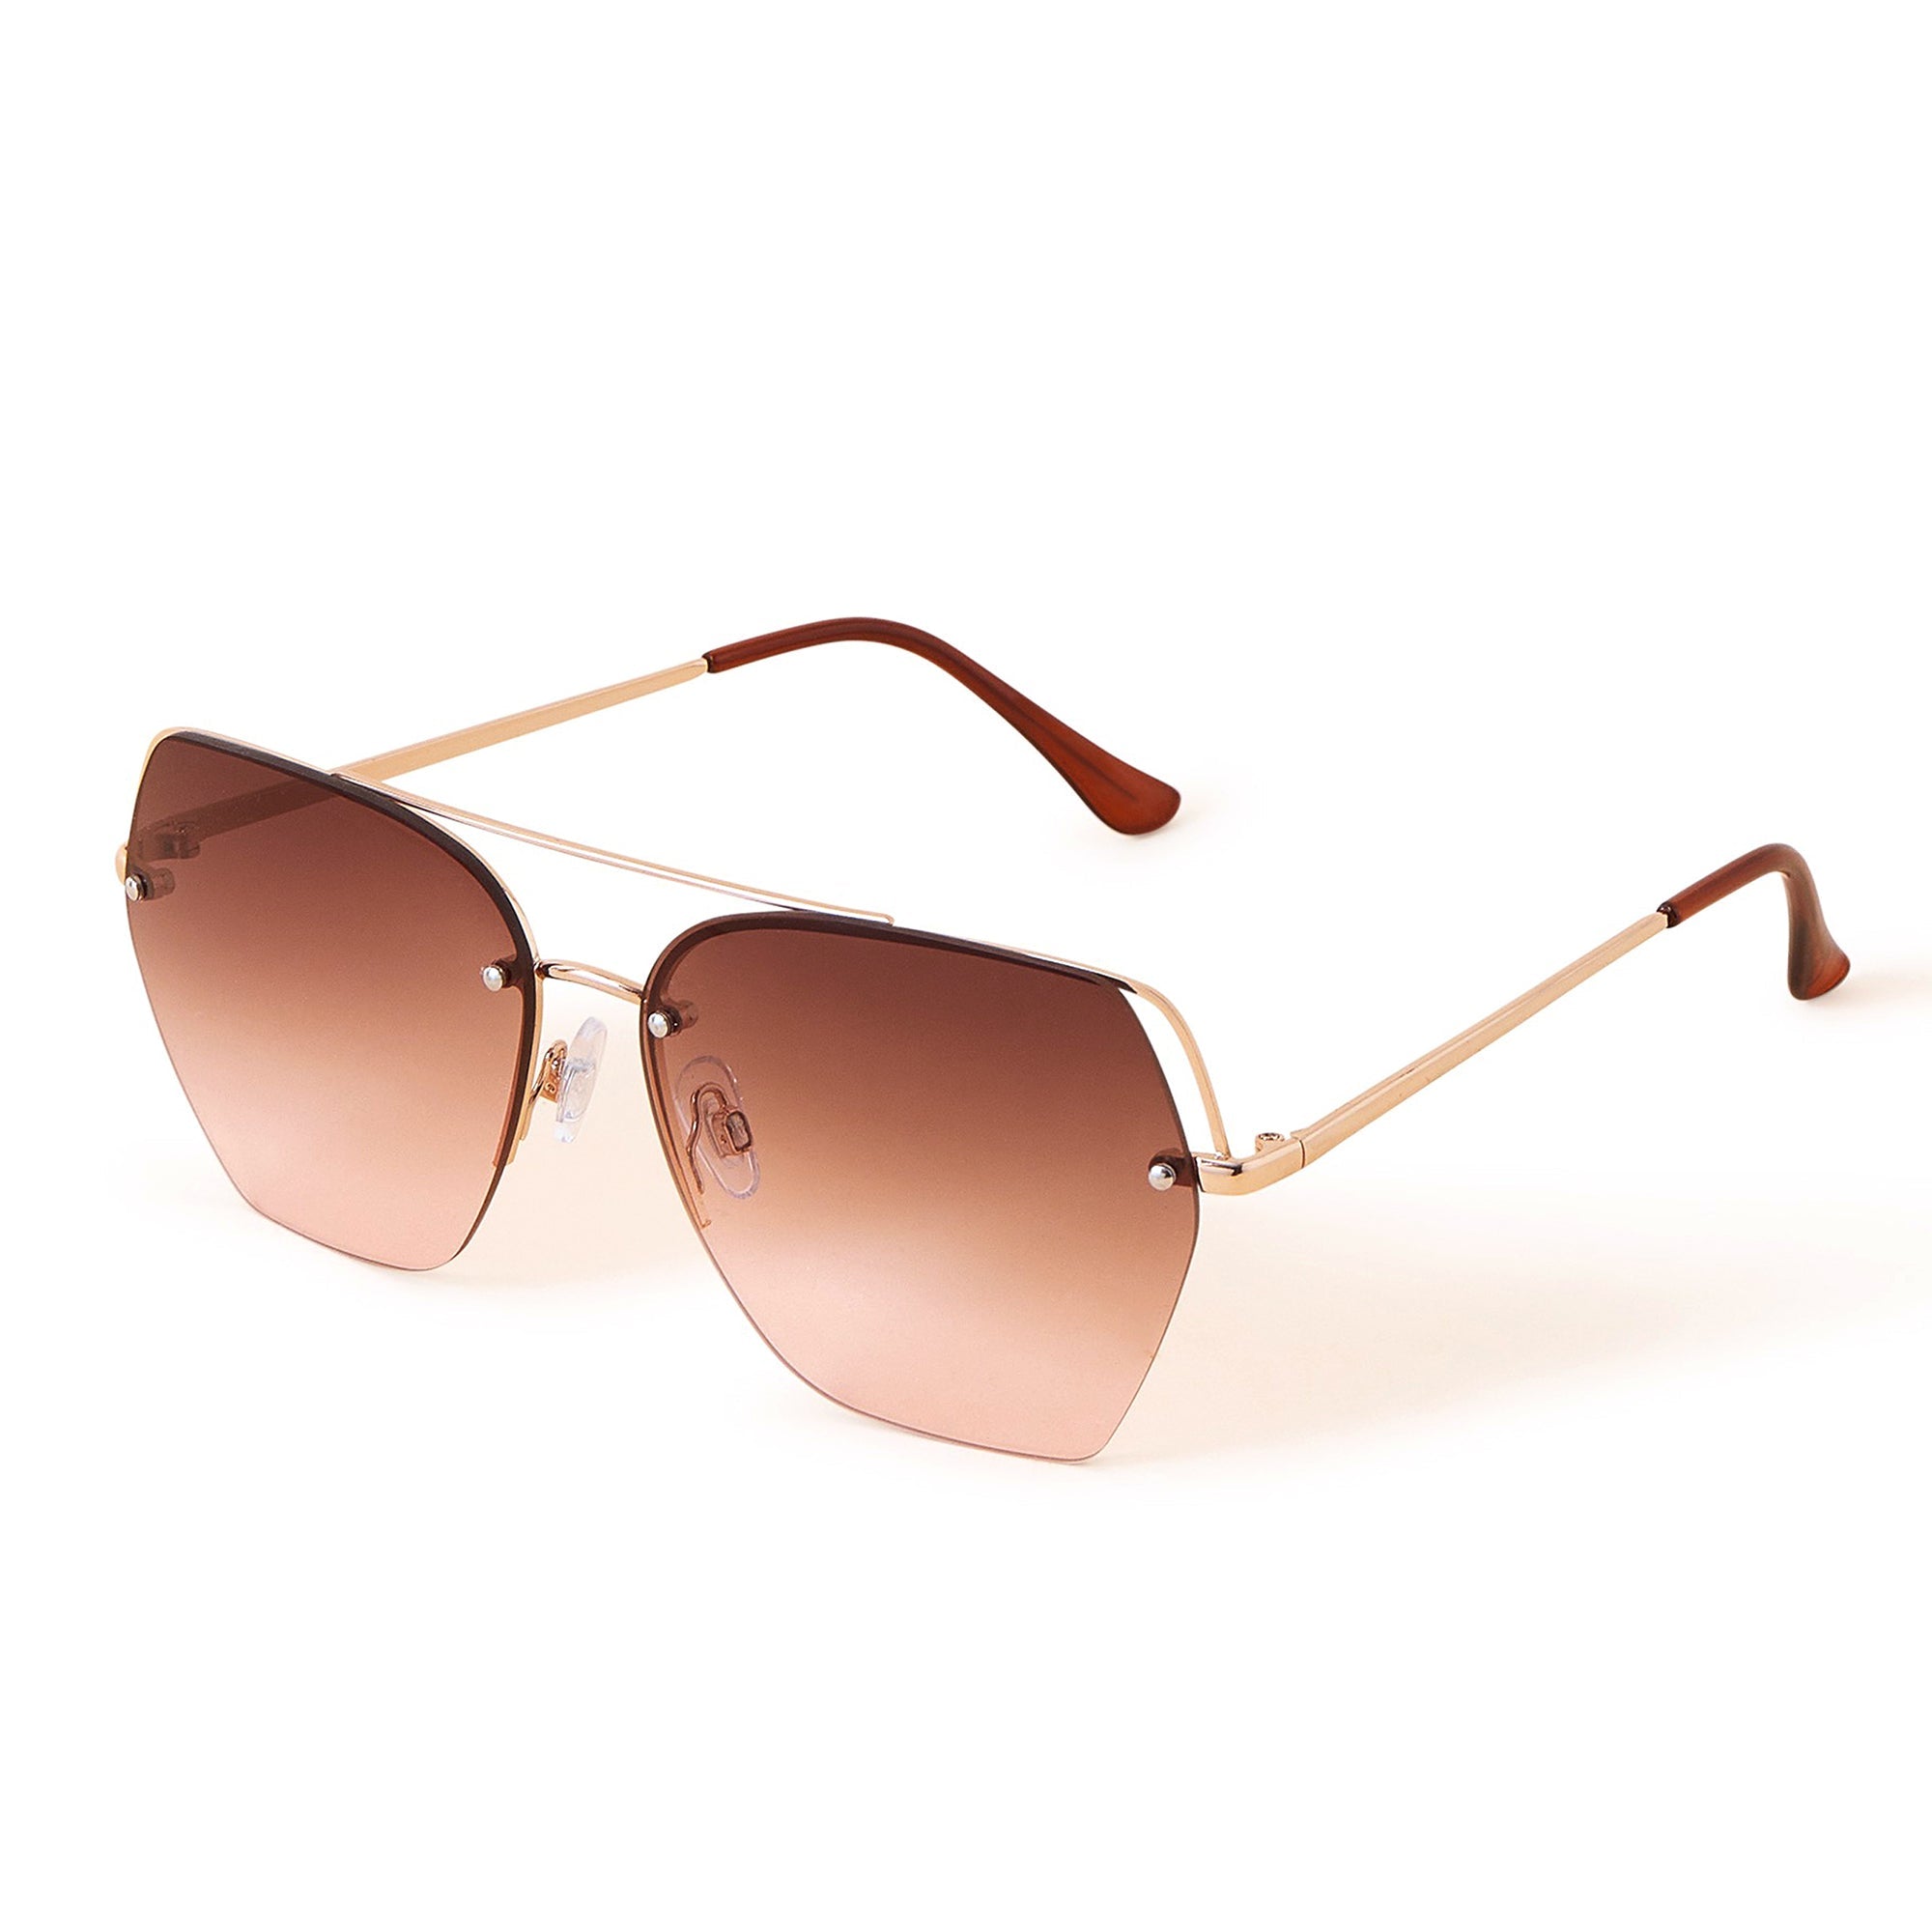 Accessorize London Women's Gold Rimless Aviator Sunglasses